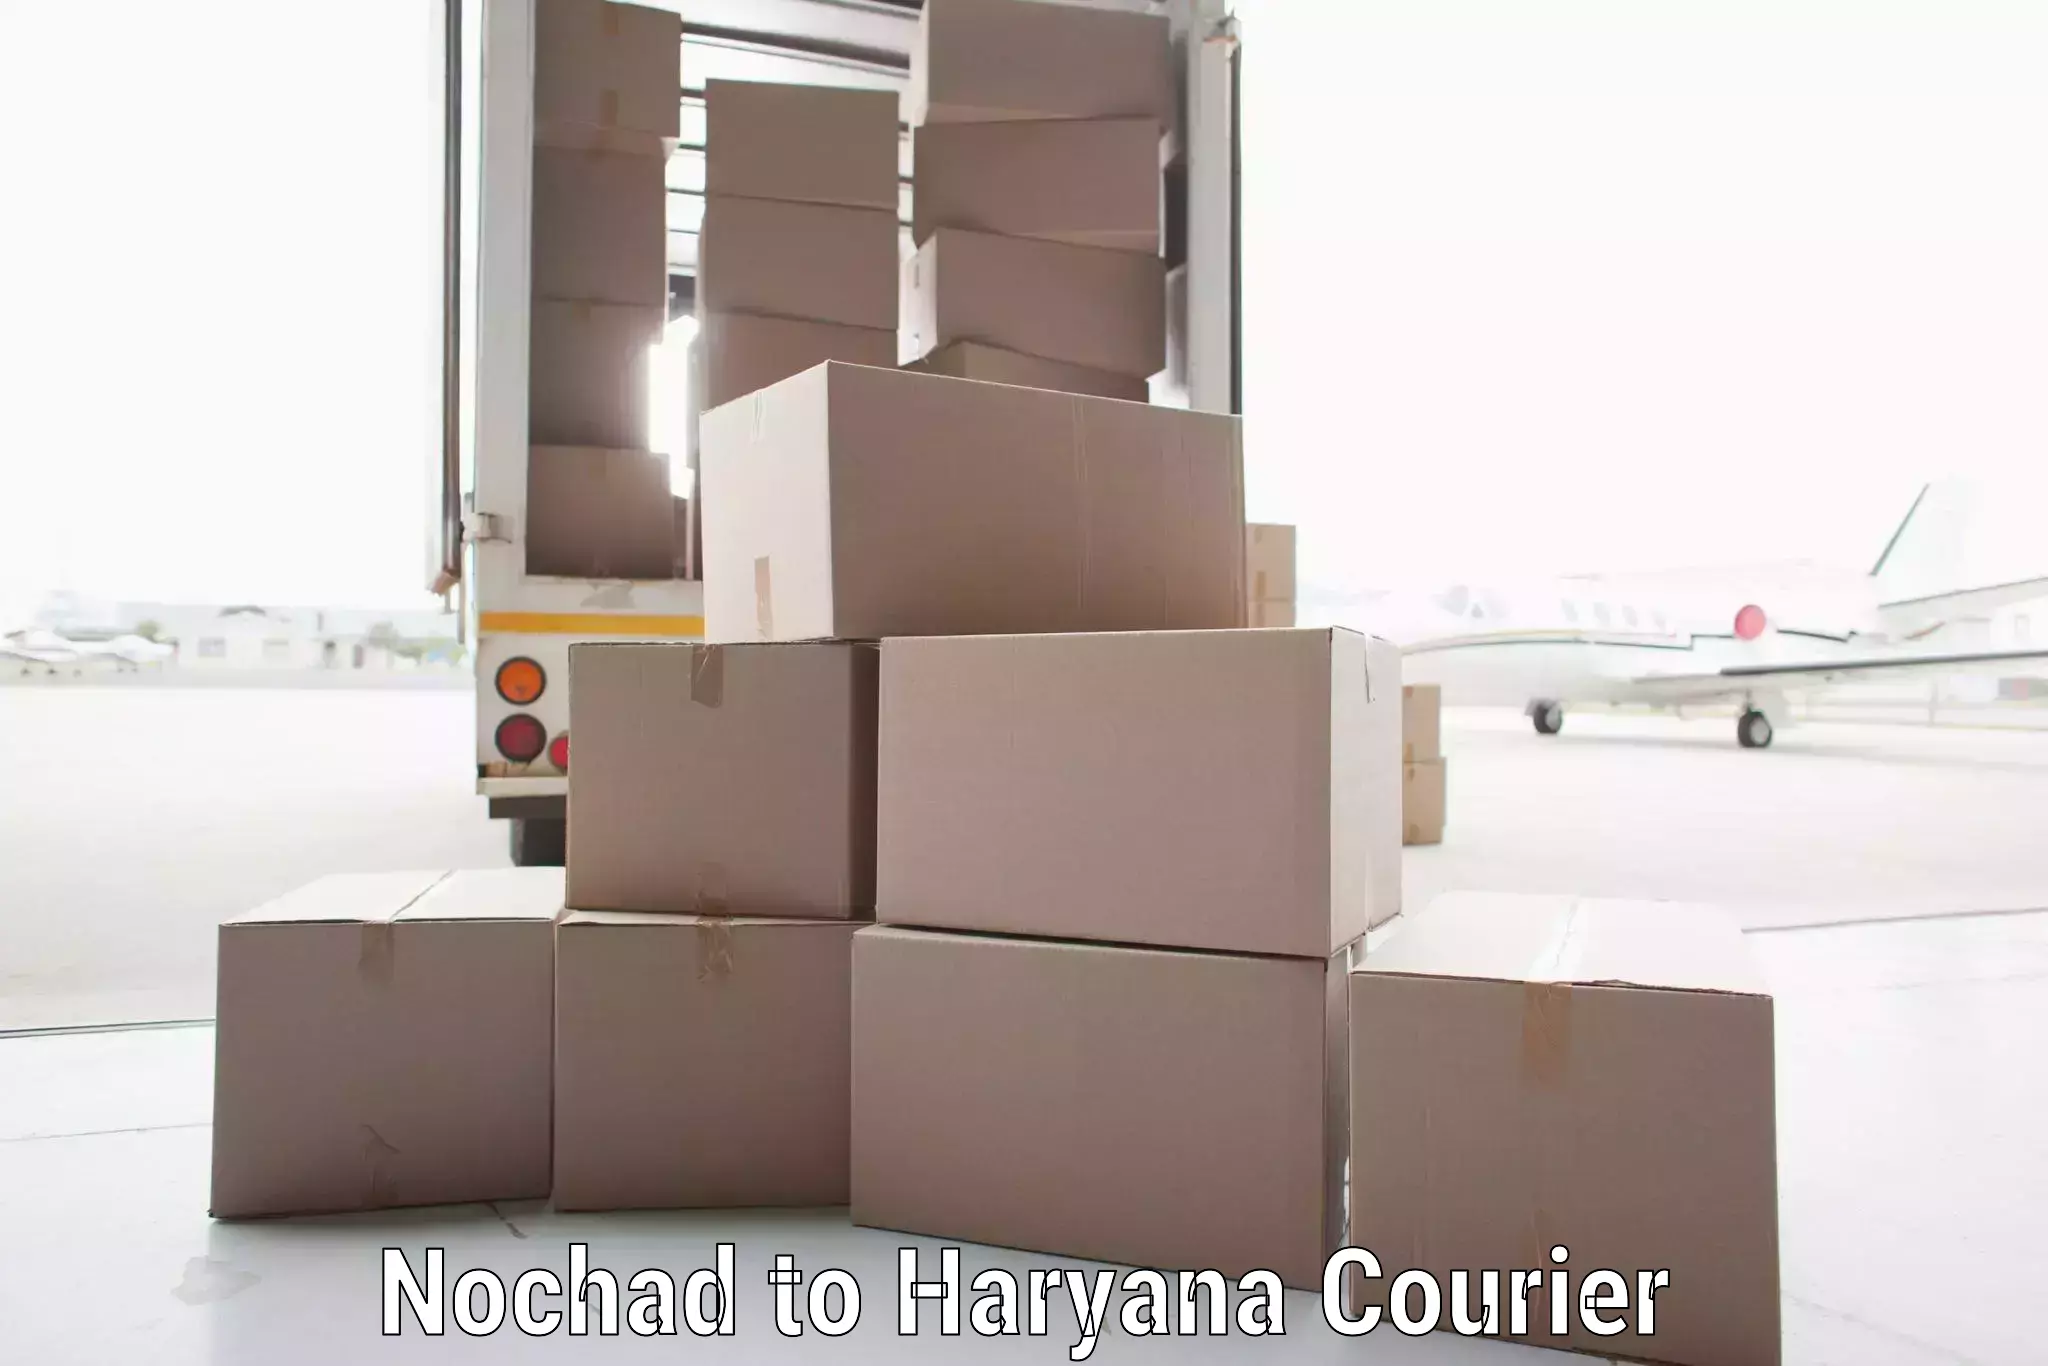 Express logistics providers Nochad to Haryana